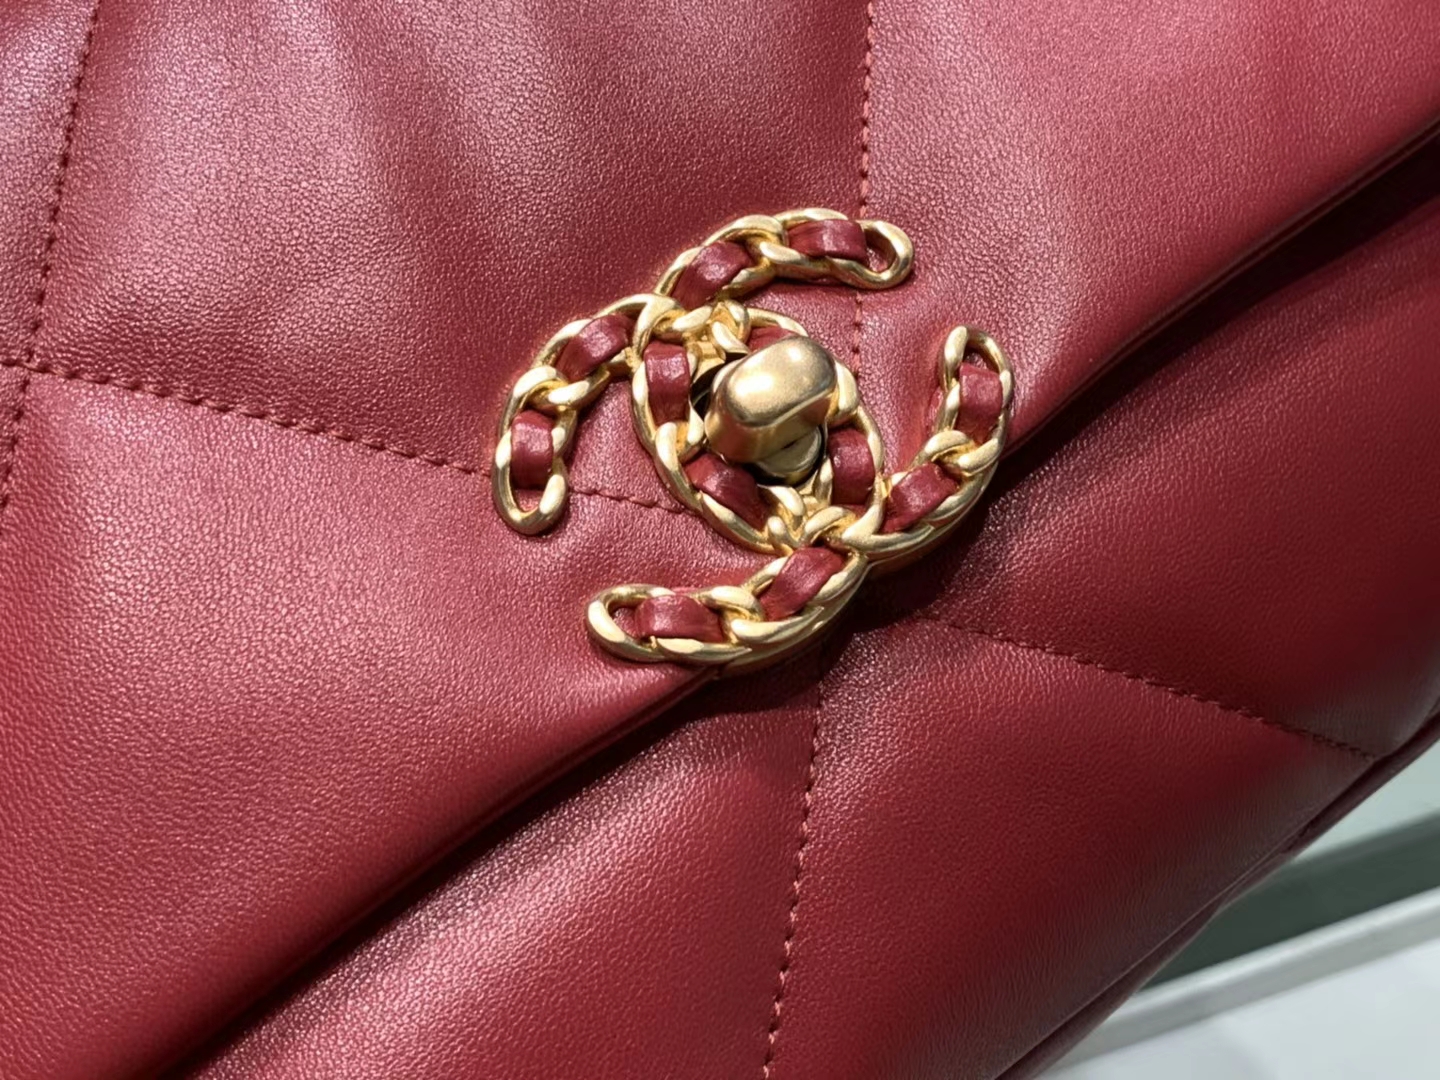 Chanel（香奈儿）19bag 口盖包 # 红色 小羊皮 26cm